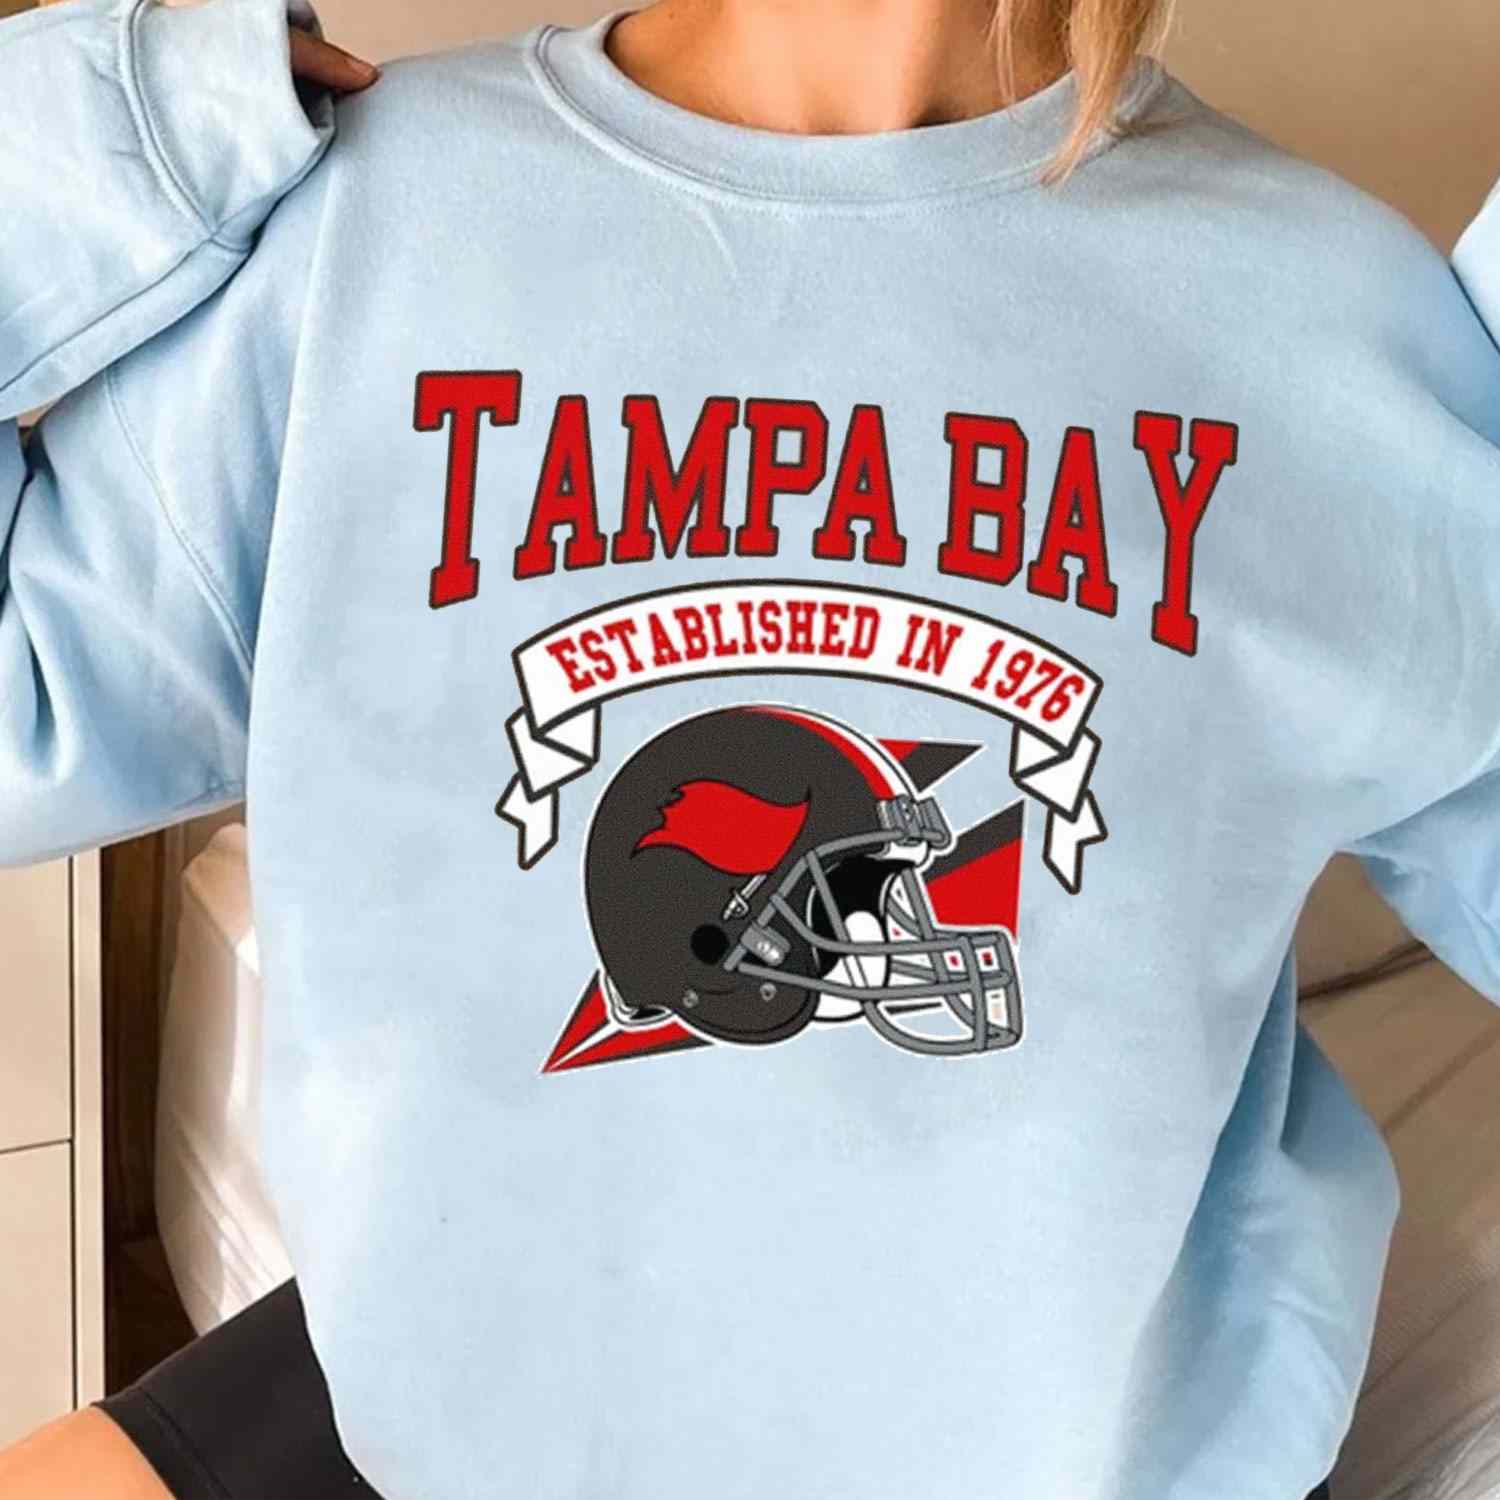 Vintage Football Team Tampa Bay Buccaneers Established In 1976 T-Shirt